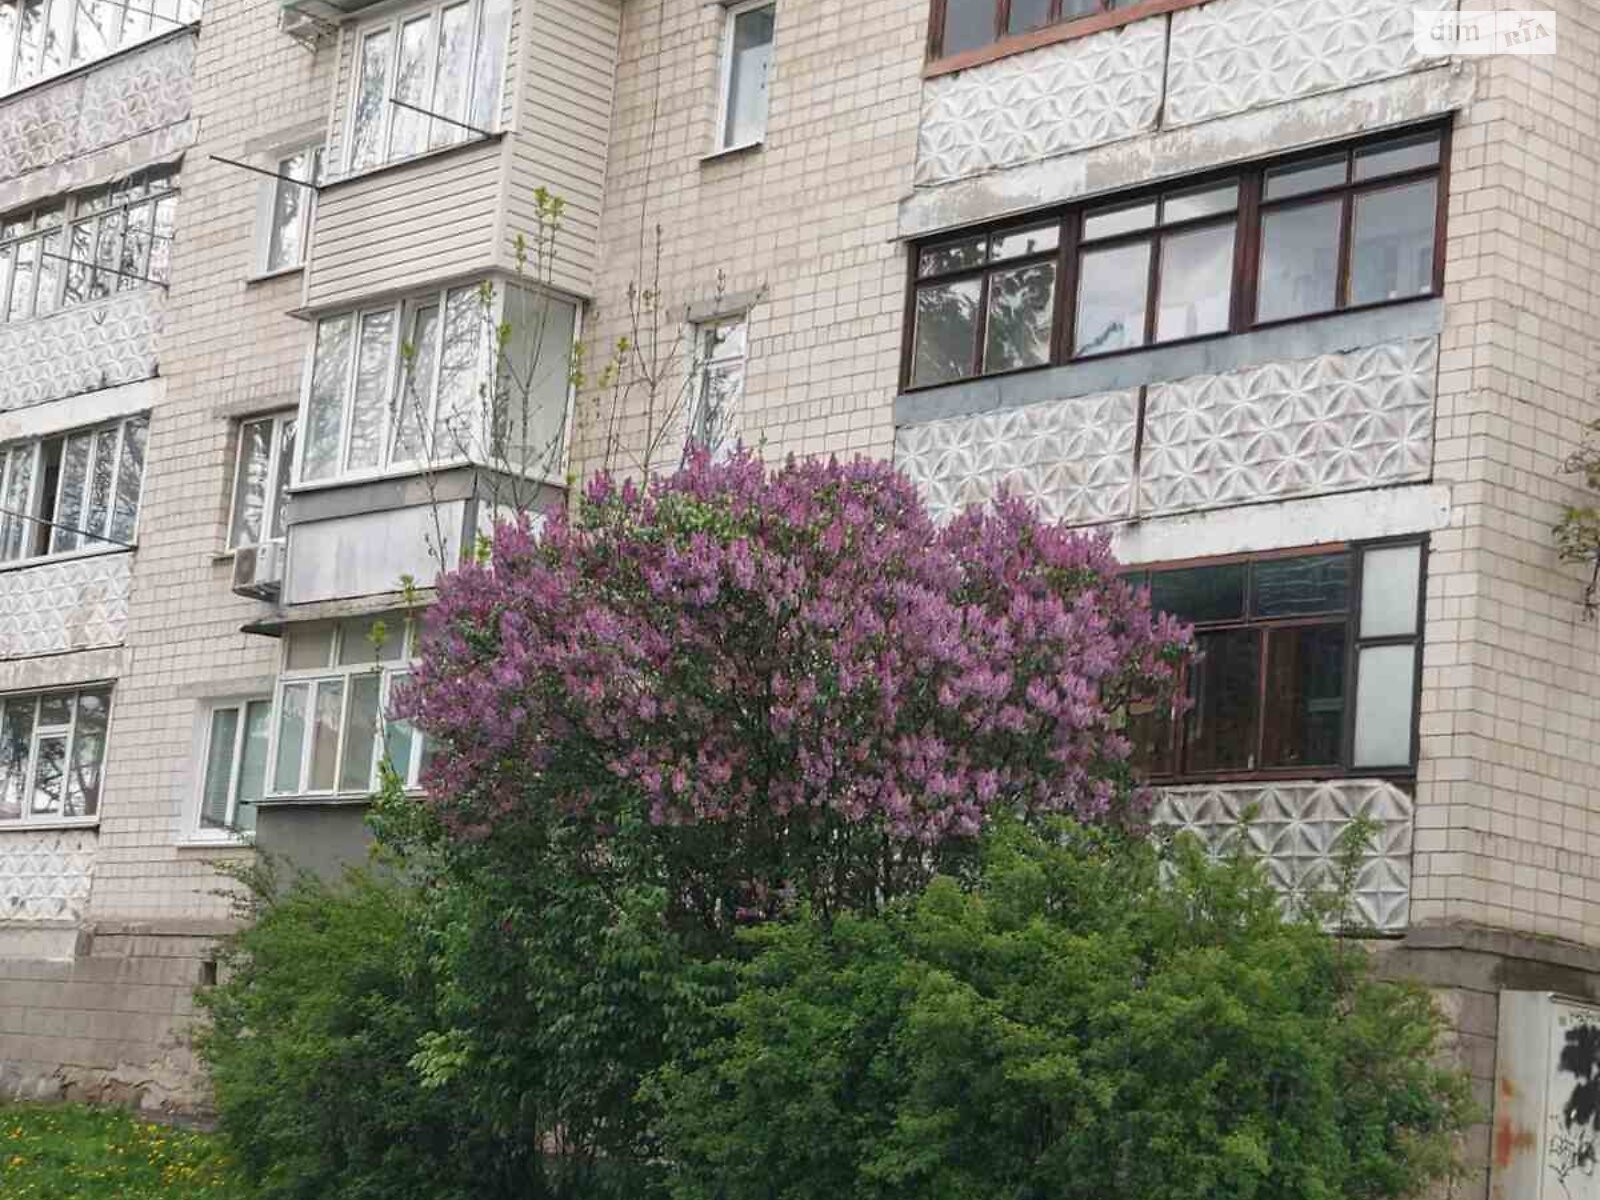 Продажа трехкомнатной квартиры в Виннице, на ул. Ивана Николайчука, район Вишенка фото 1